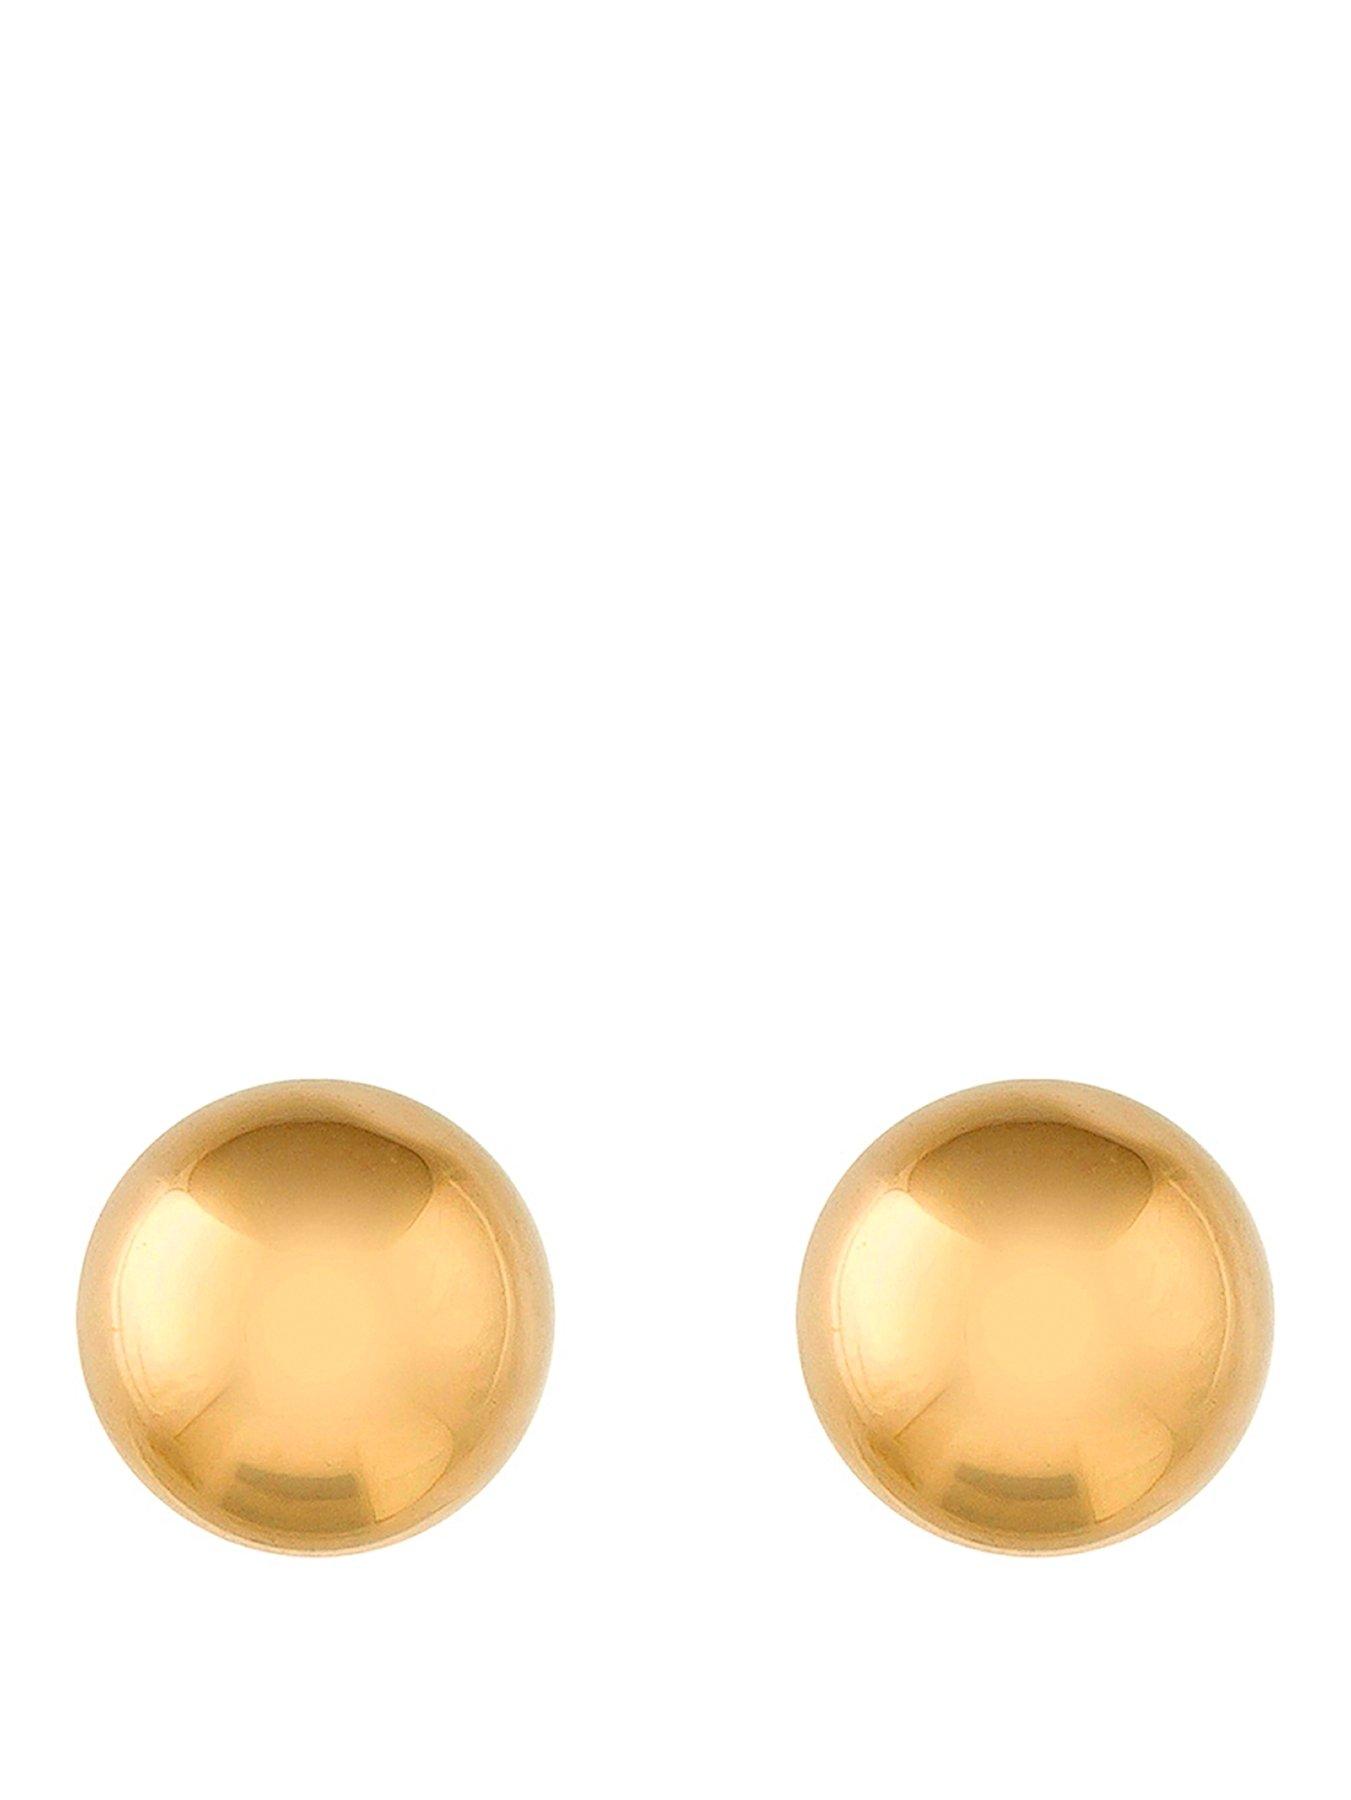  9 Carat Yellow Gold 5 mm Ball Stud Earrings